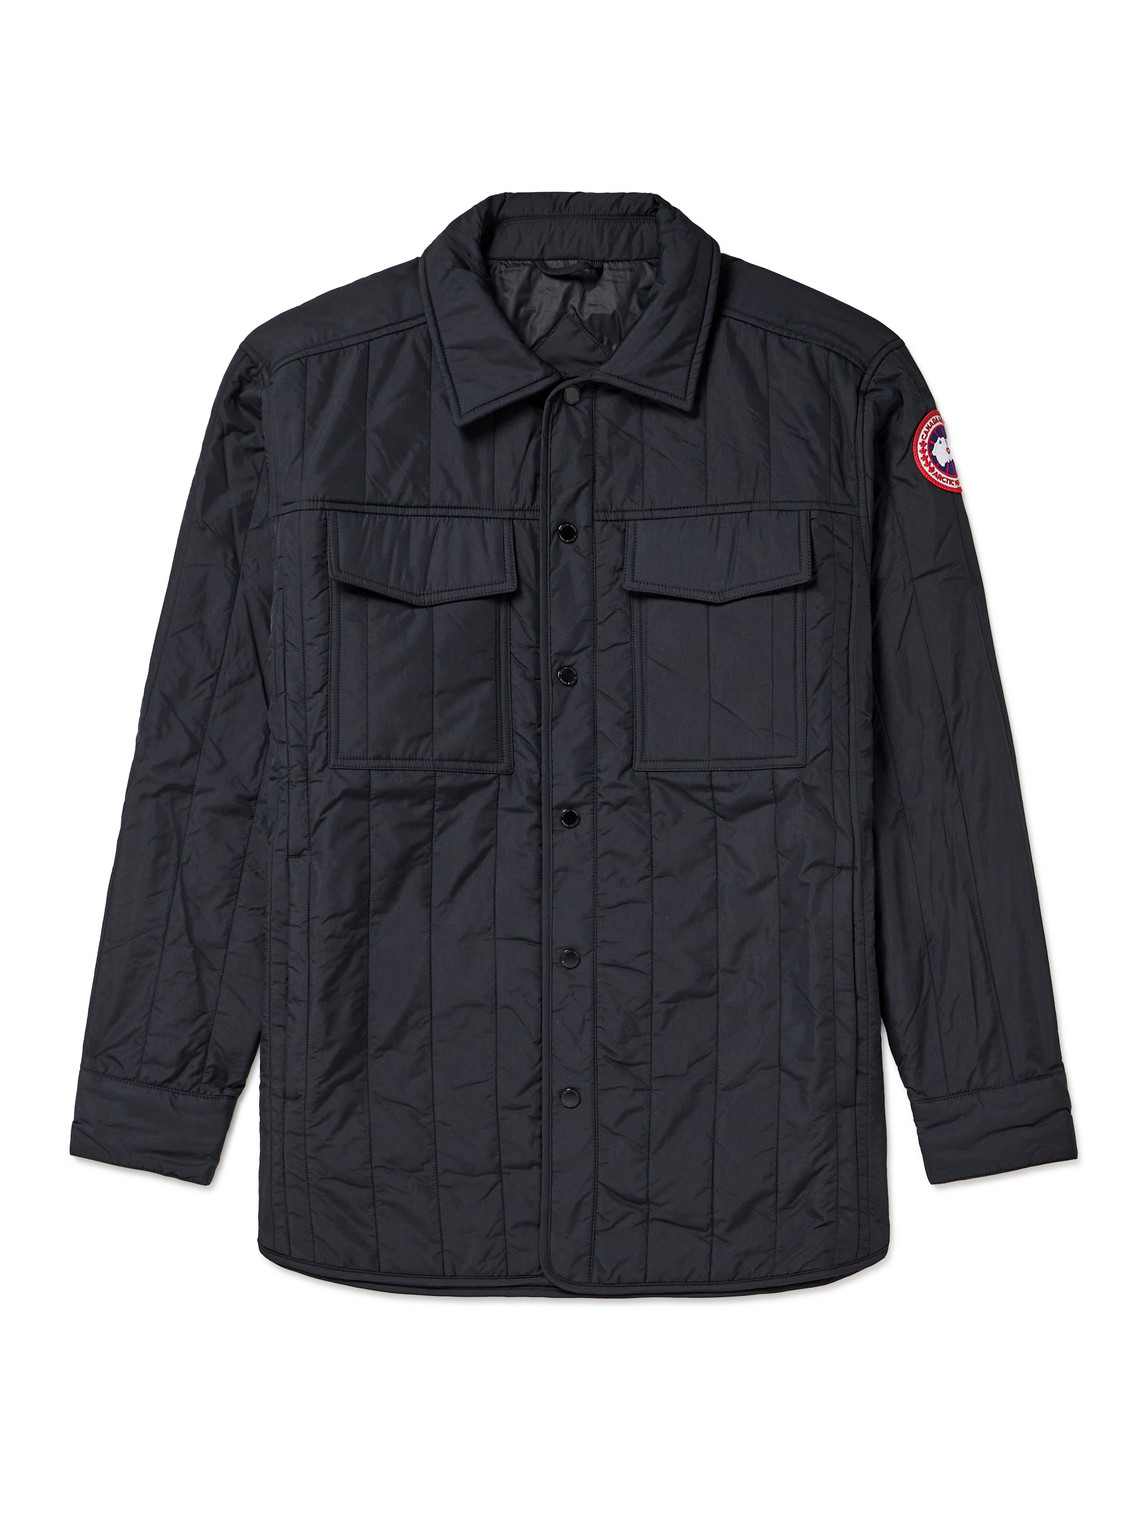 Canada Goose - HyBridge Quilted Shell Shirt Jacket - Men - Black - M von Canada Goose